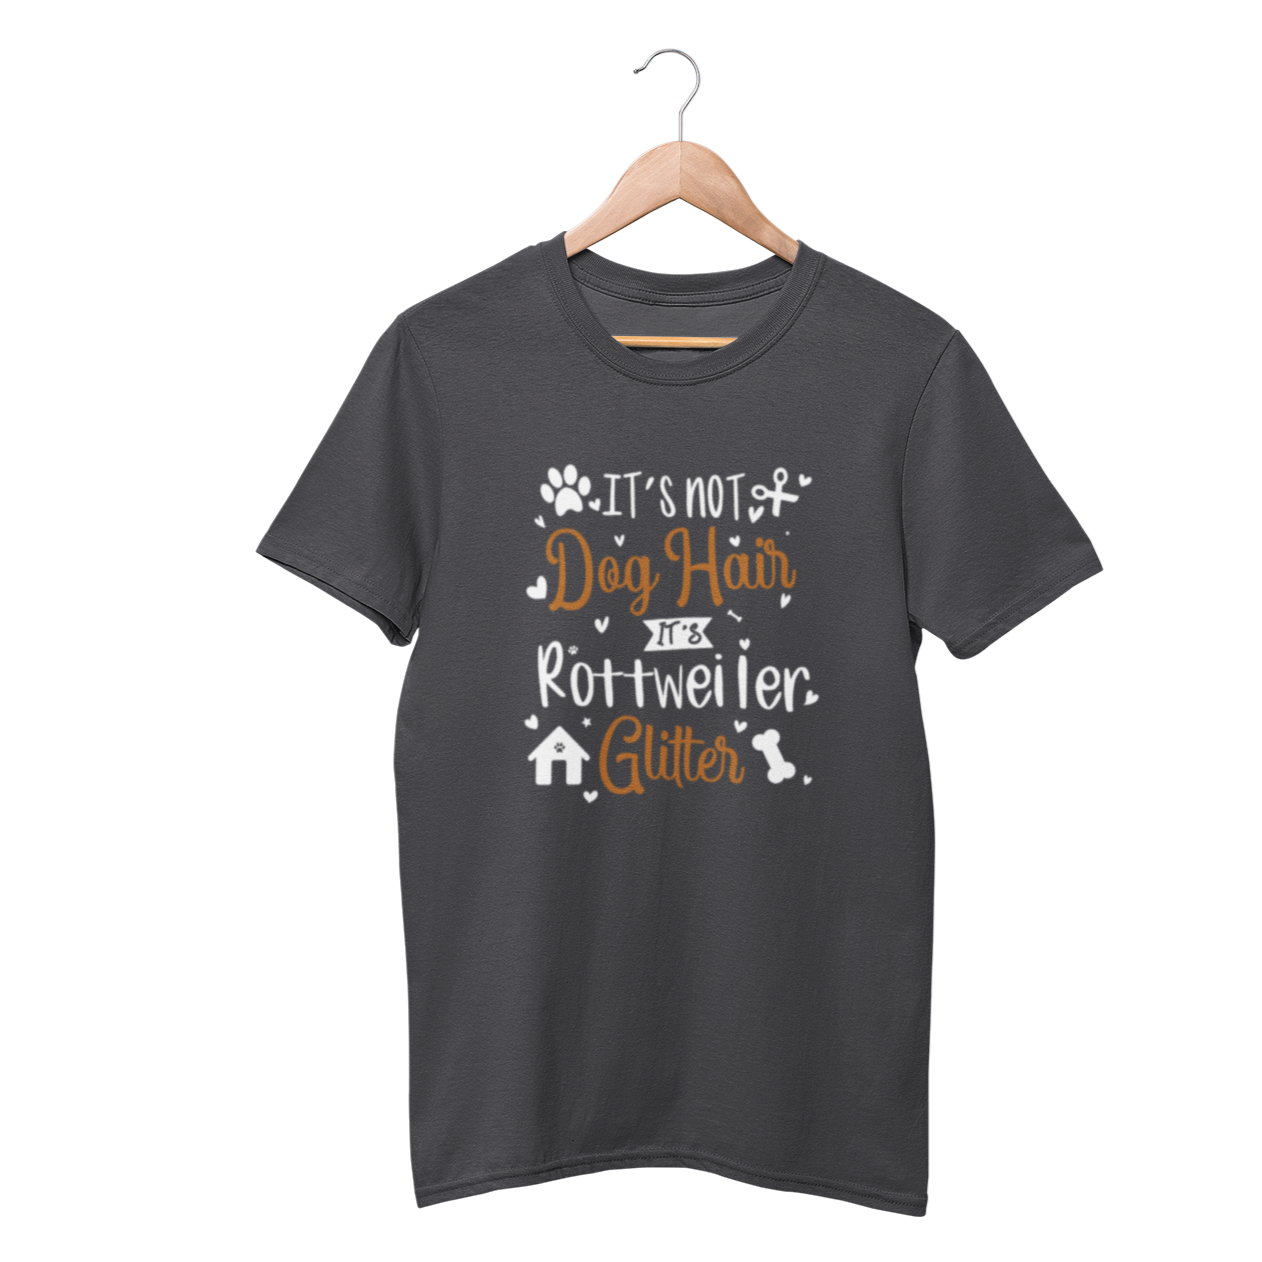 Rottweiler Glitter Shirt - Funny Labrador Cute Shirt Labradors Labs